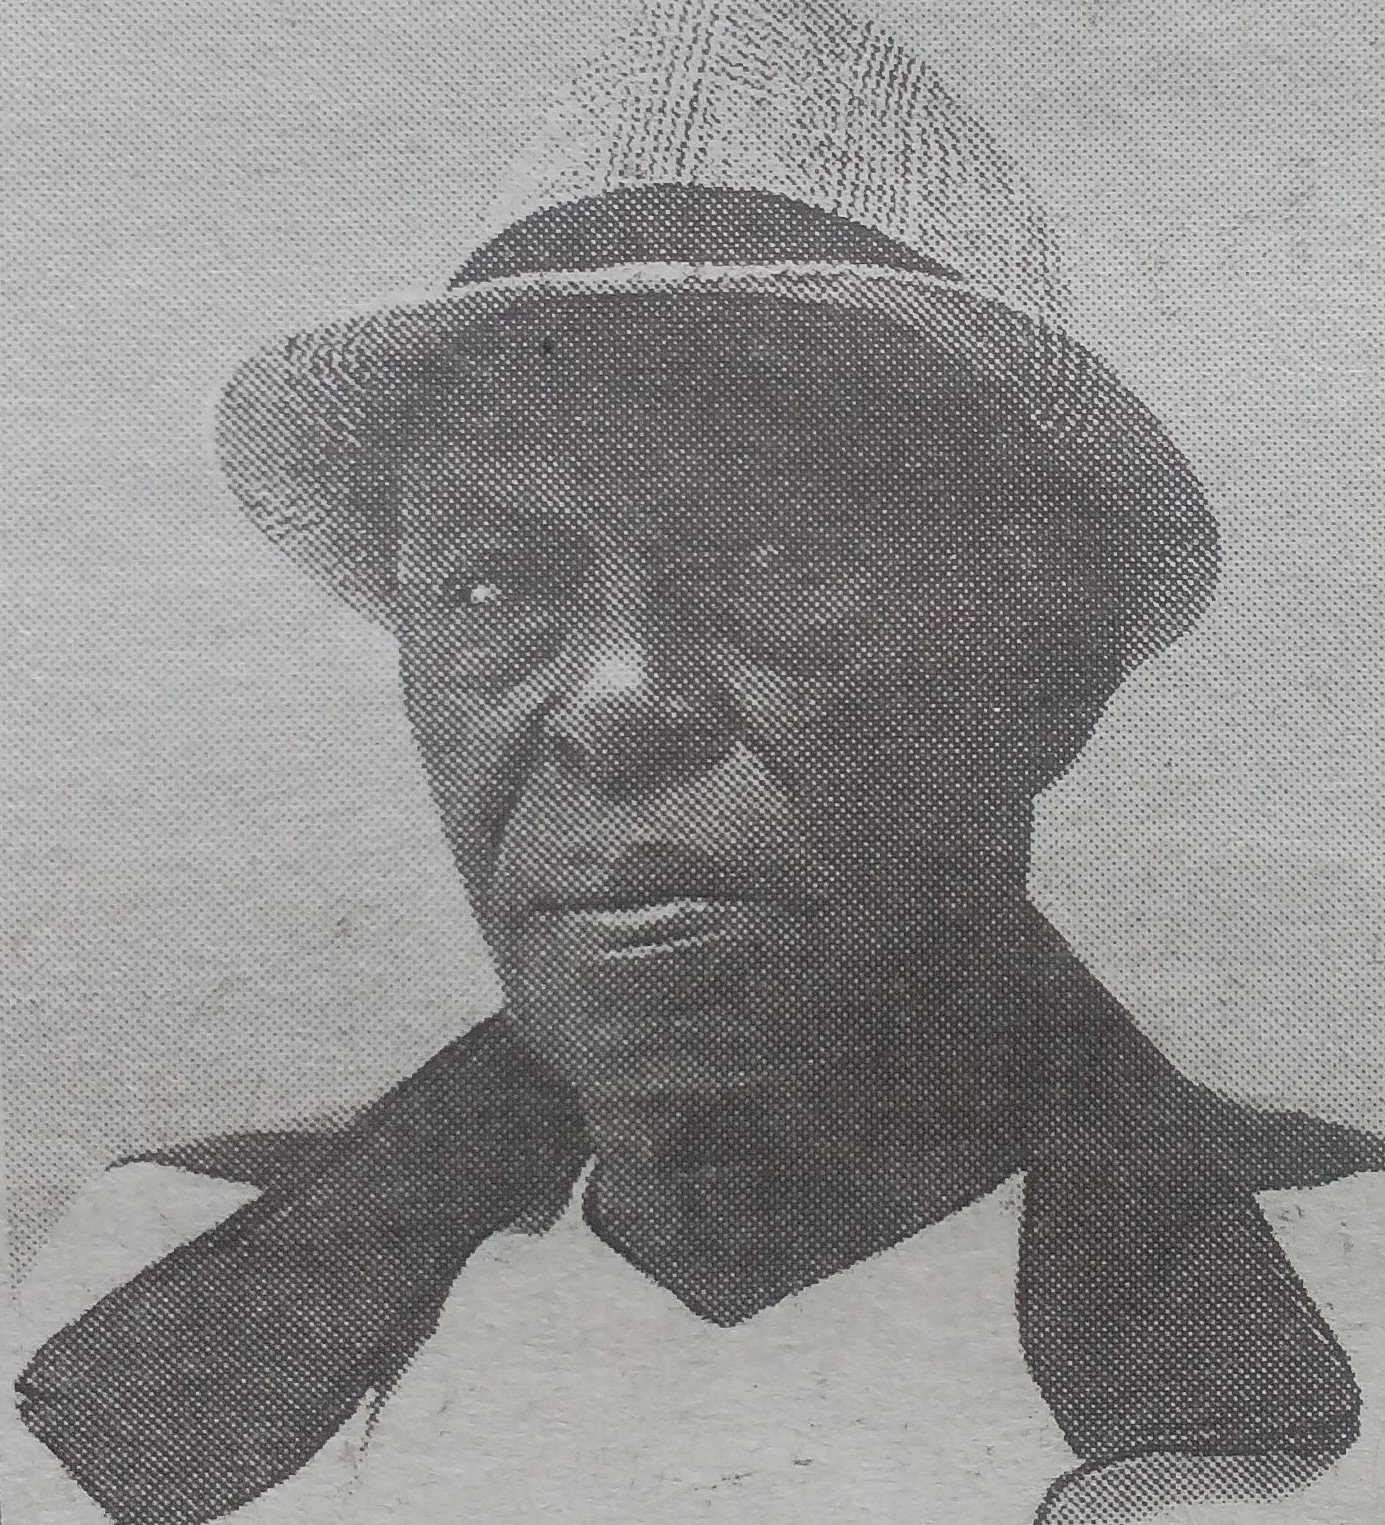 Obituary Image of Fredrick Kirumbi (Fred)